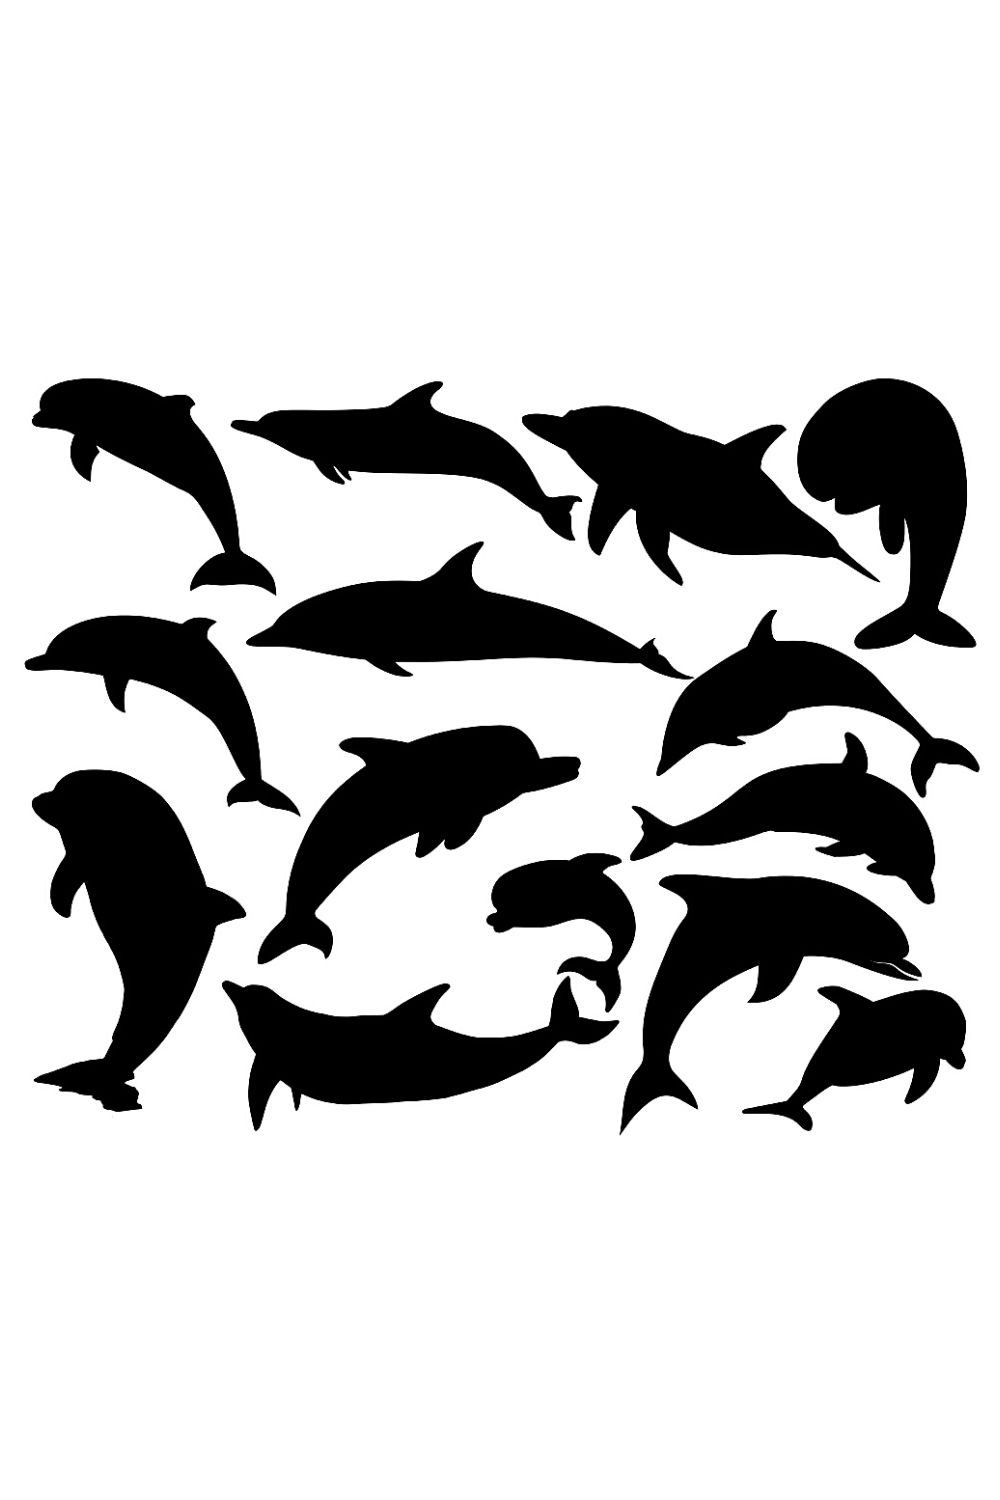 Dolphin Silhouette Bundle Pinterest image.